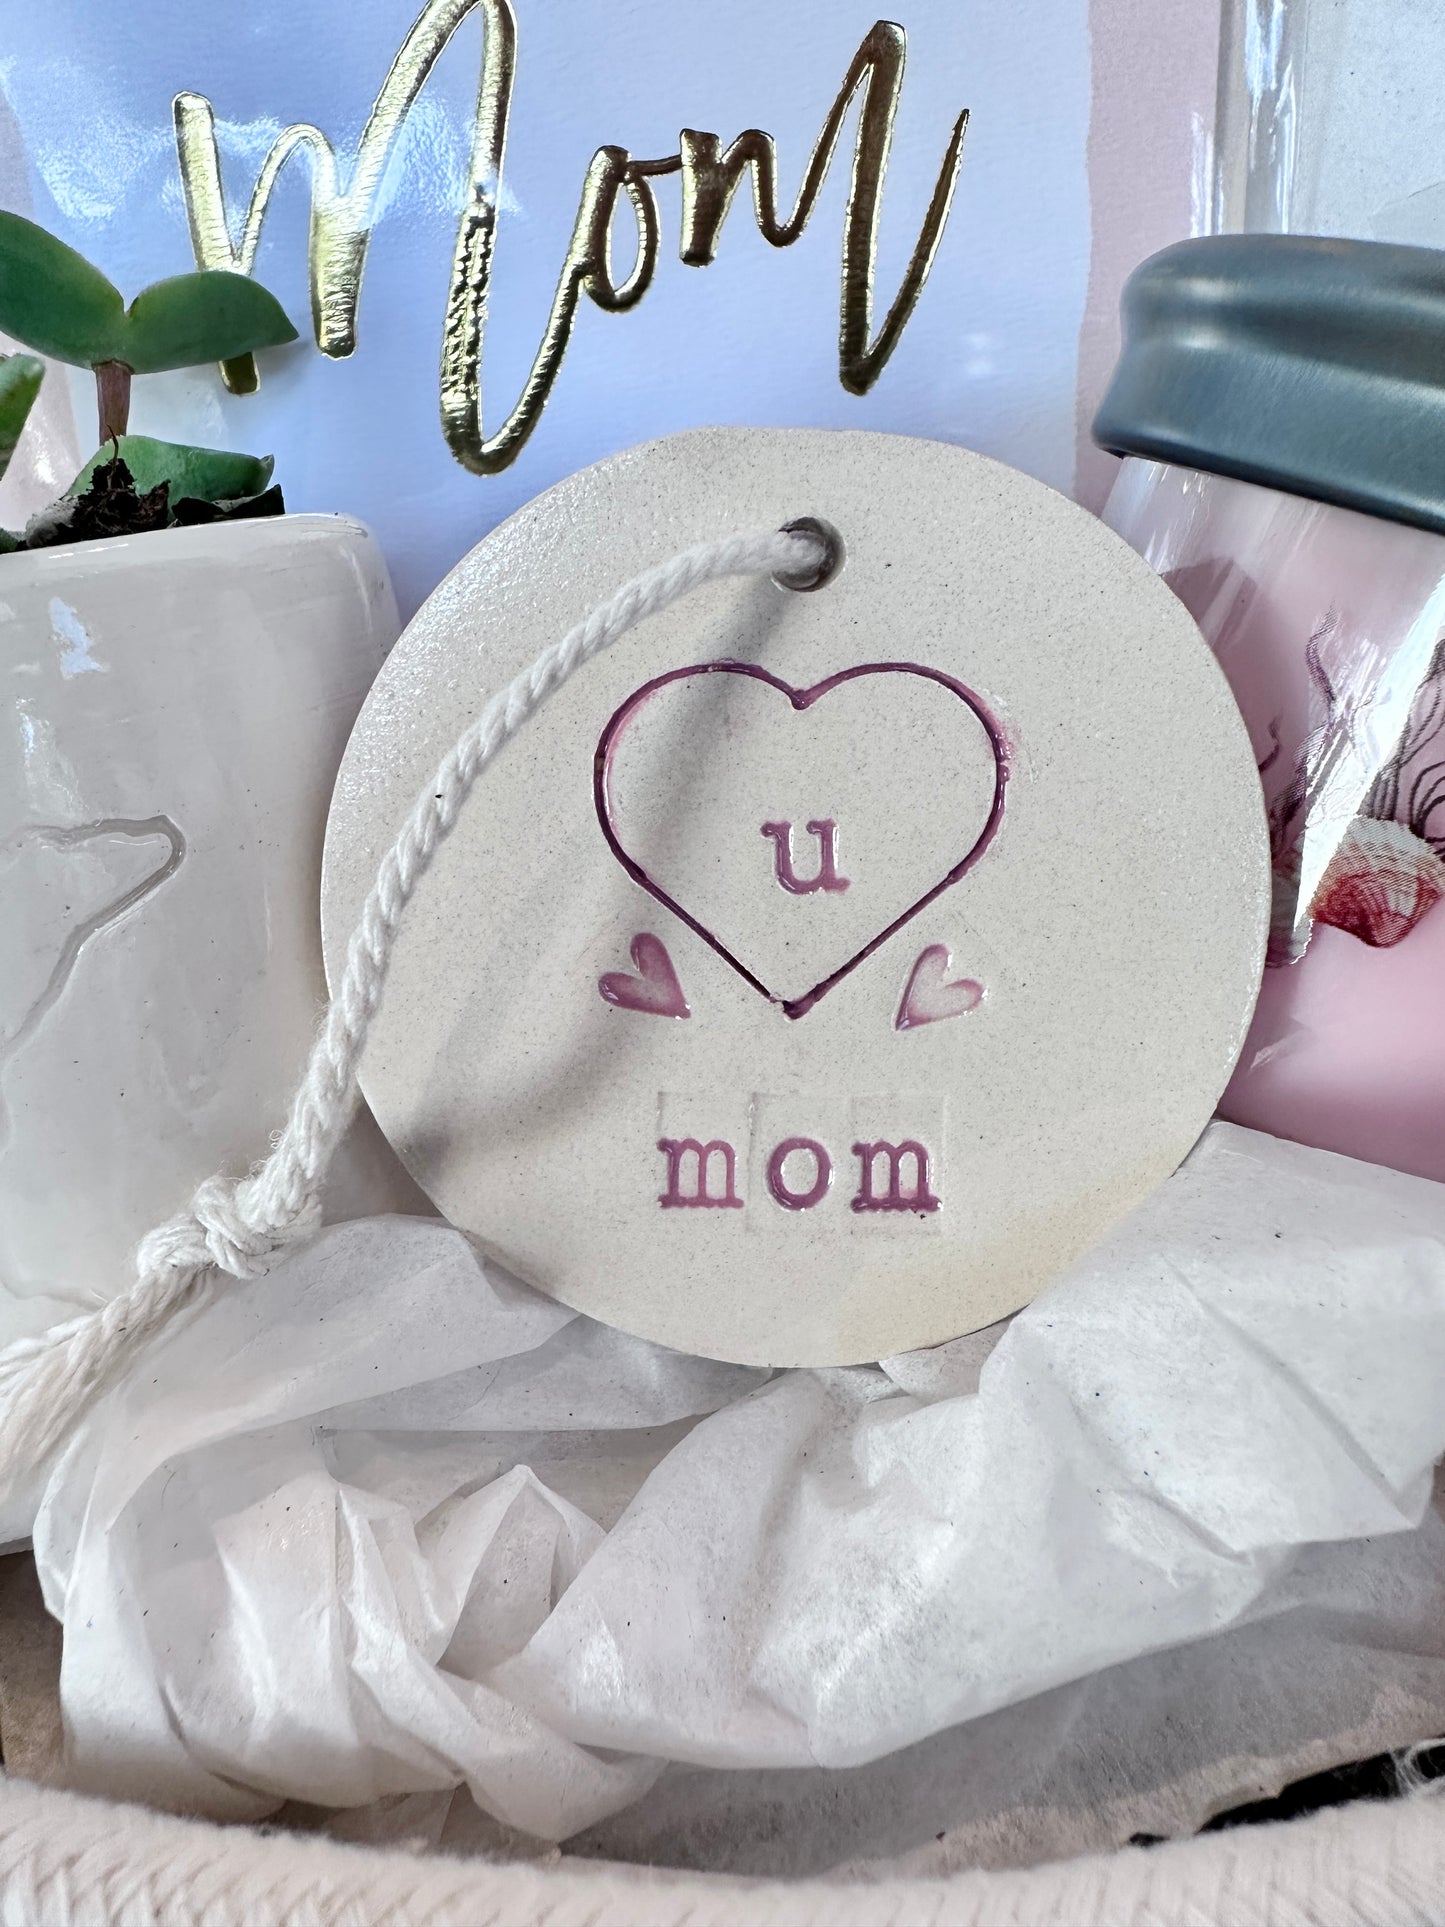 “MN MOM” Gift Basket